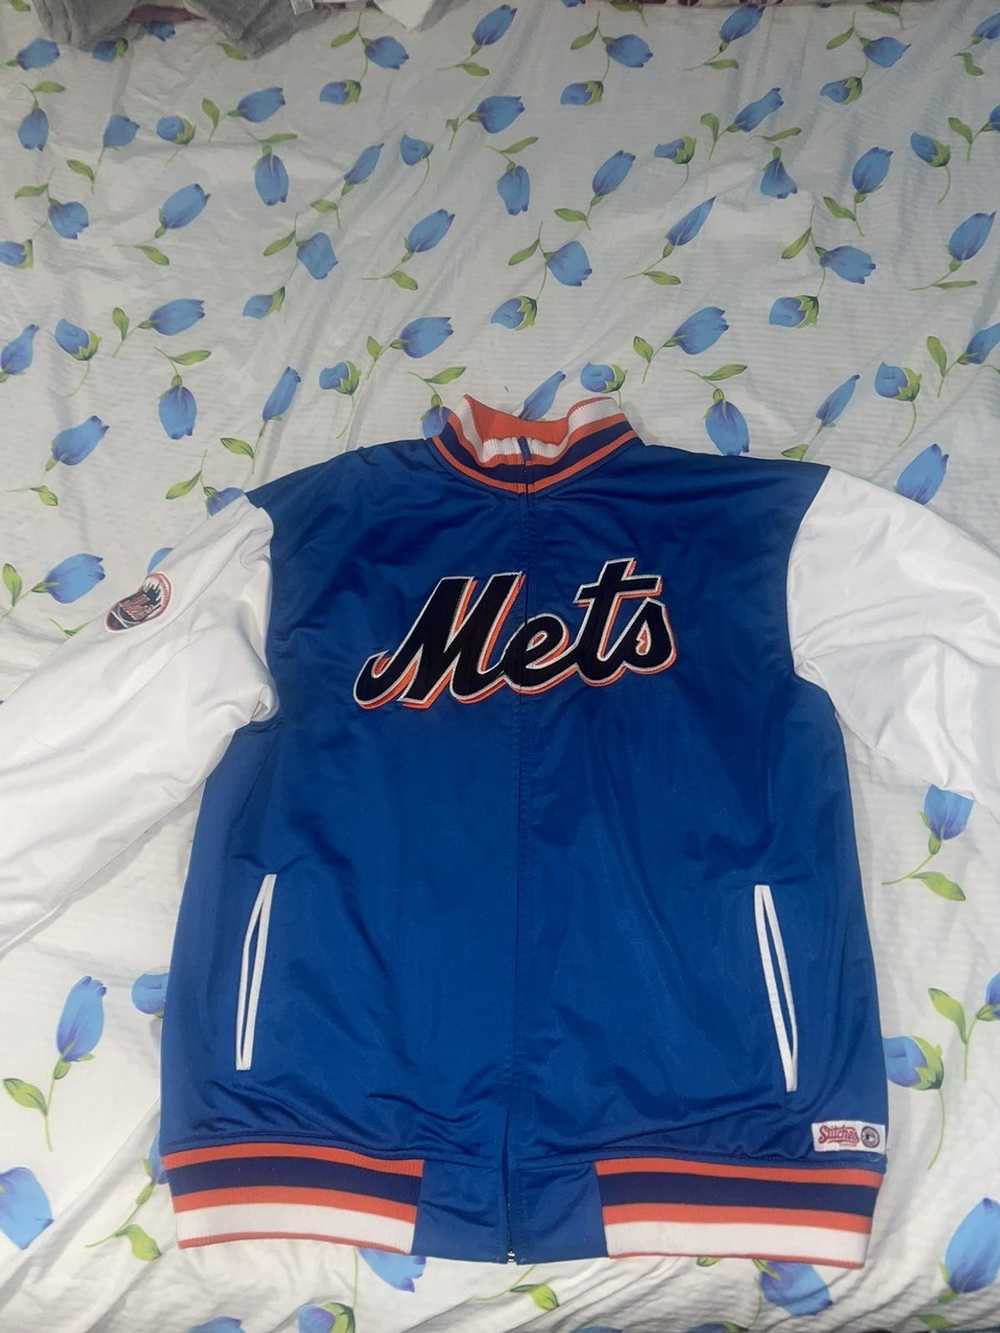 PETE ALONSO  New York Mets 1987 Away Majestic Throwback Baseball Jersey